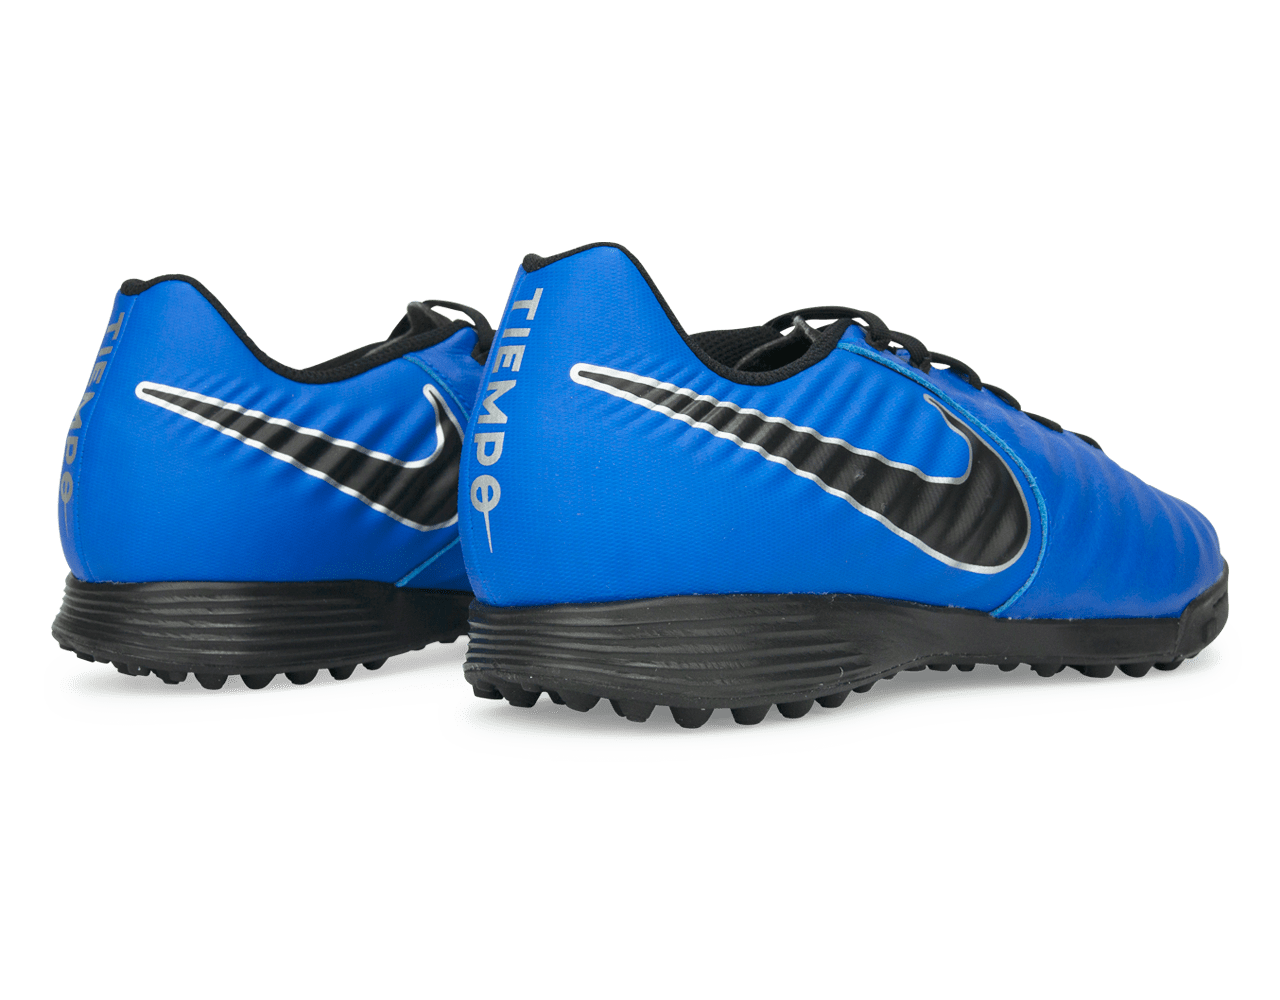 Nike Men's Tiempo Legend 7 Academy Turf Soccer Shoes Racer Blue/Metallic Silver